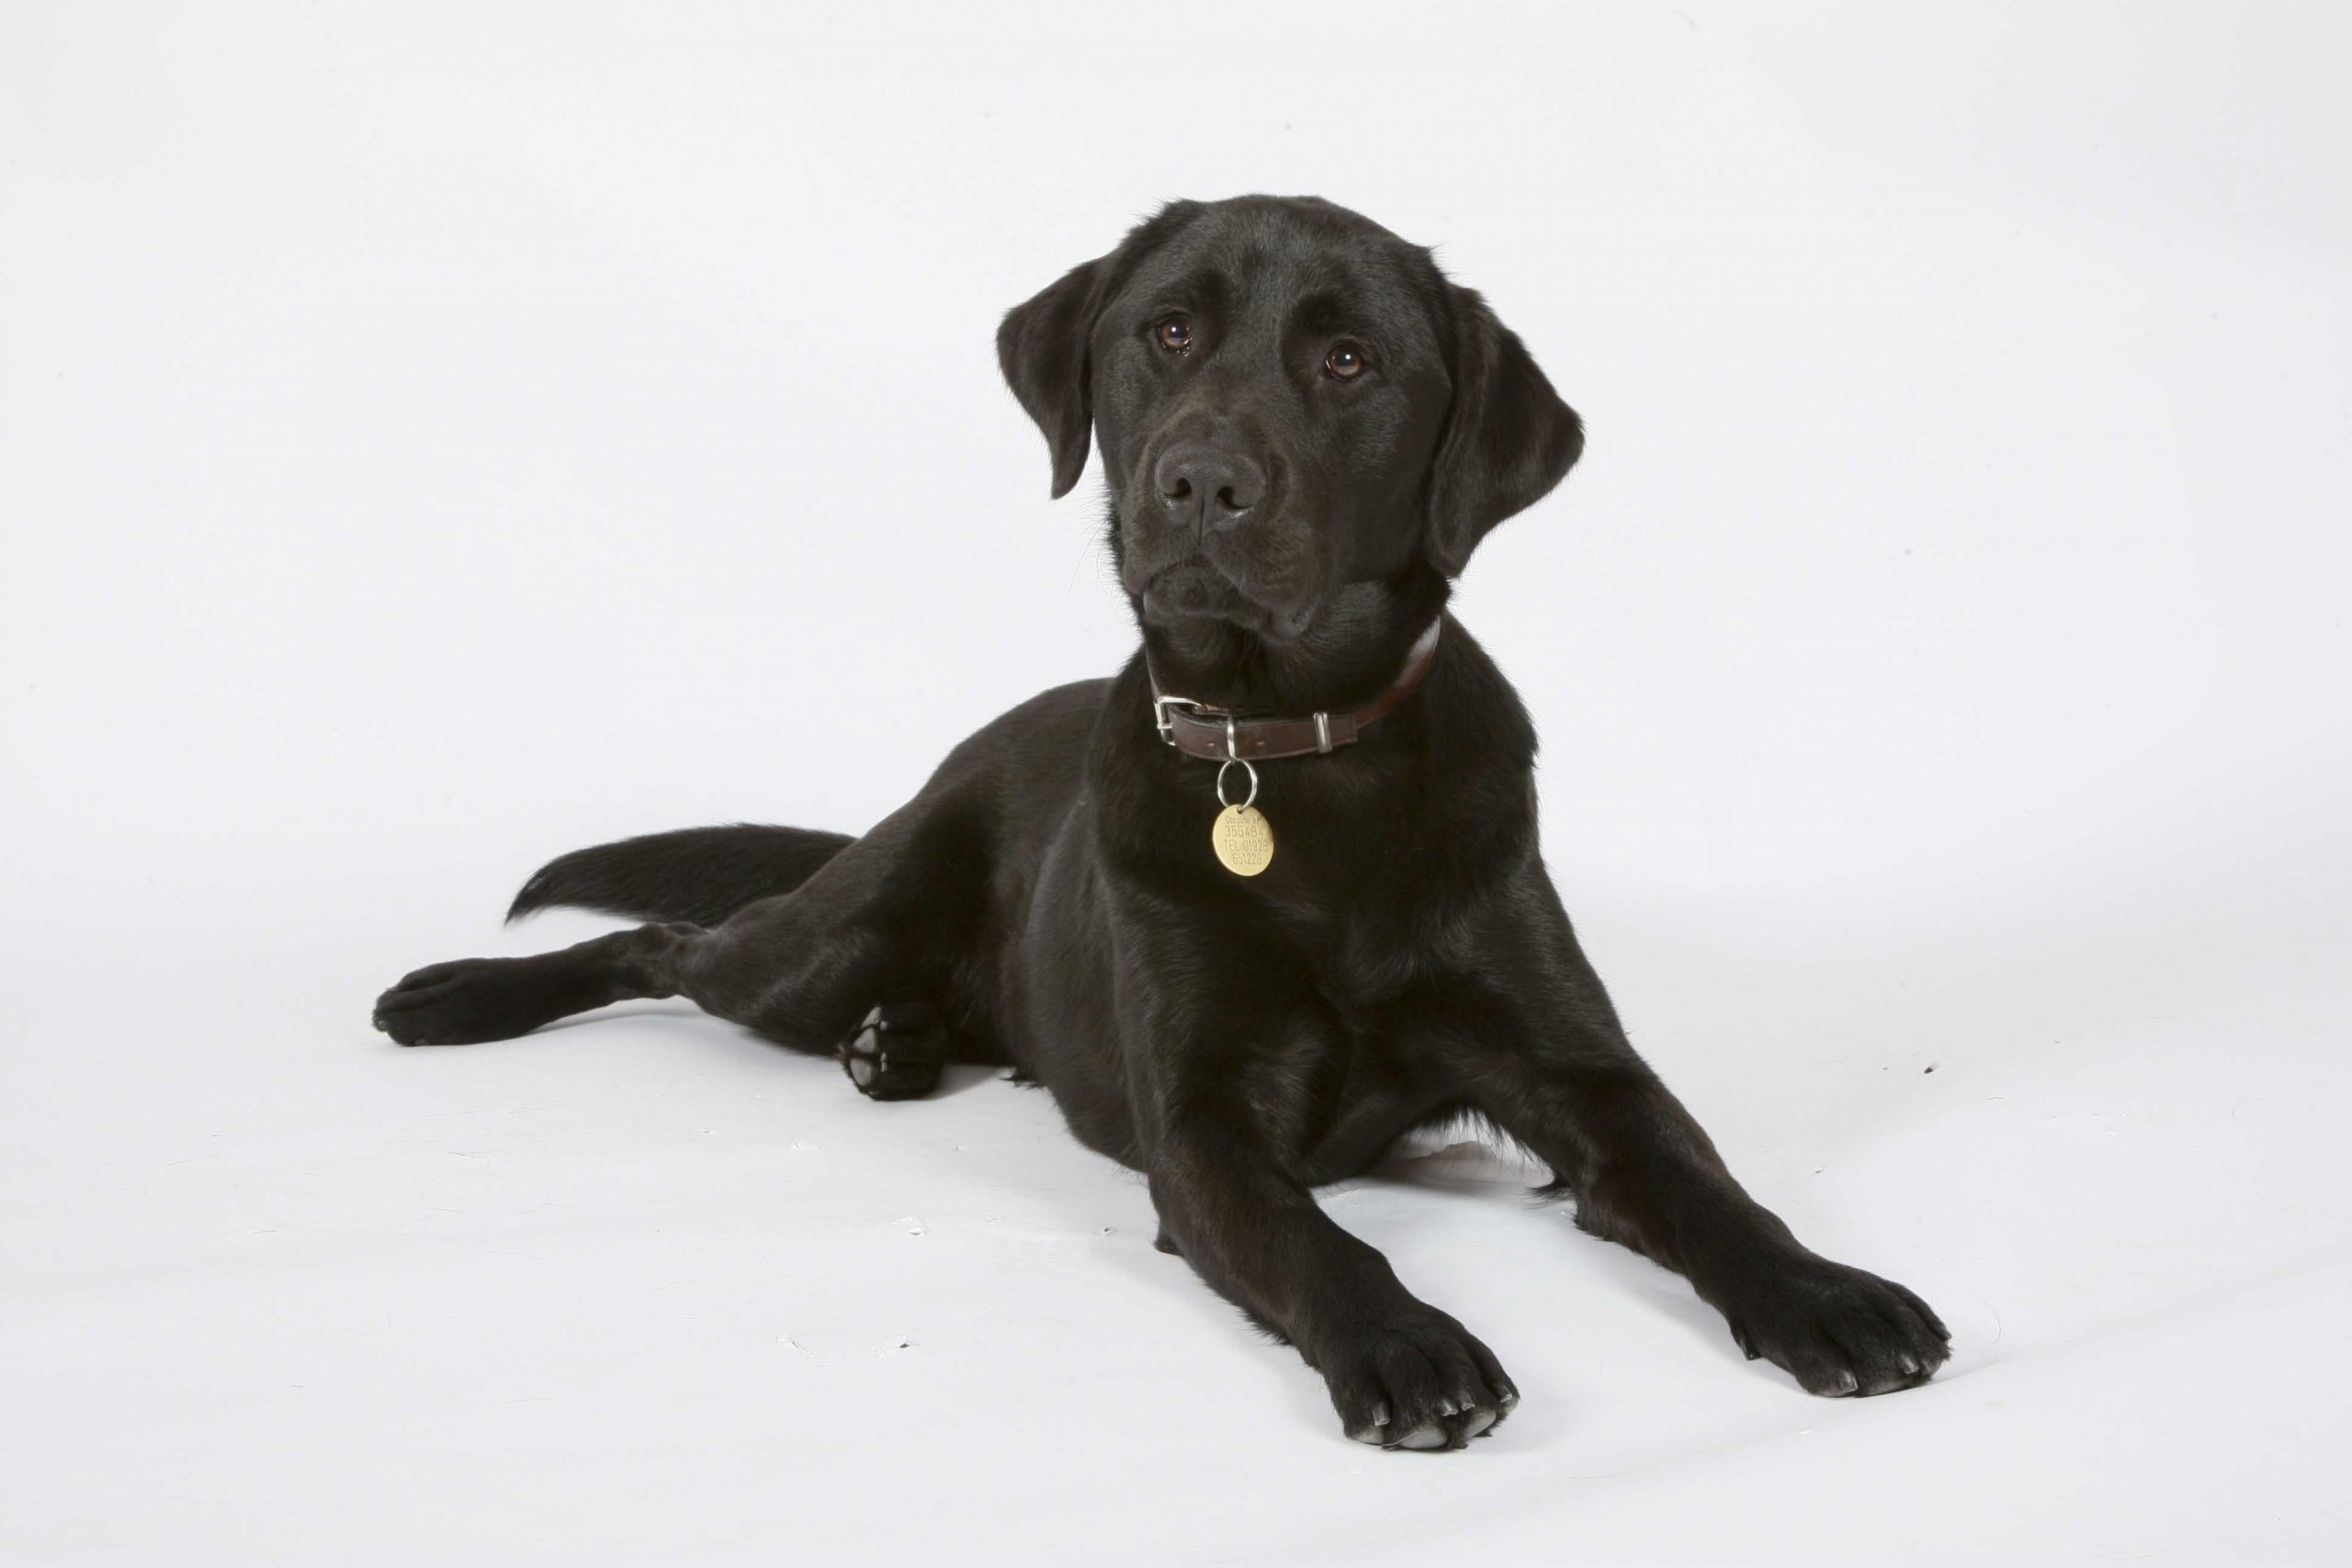 Black labrador Guide Dog posing in studio on white background